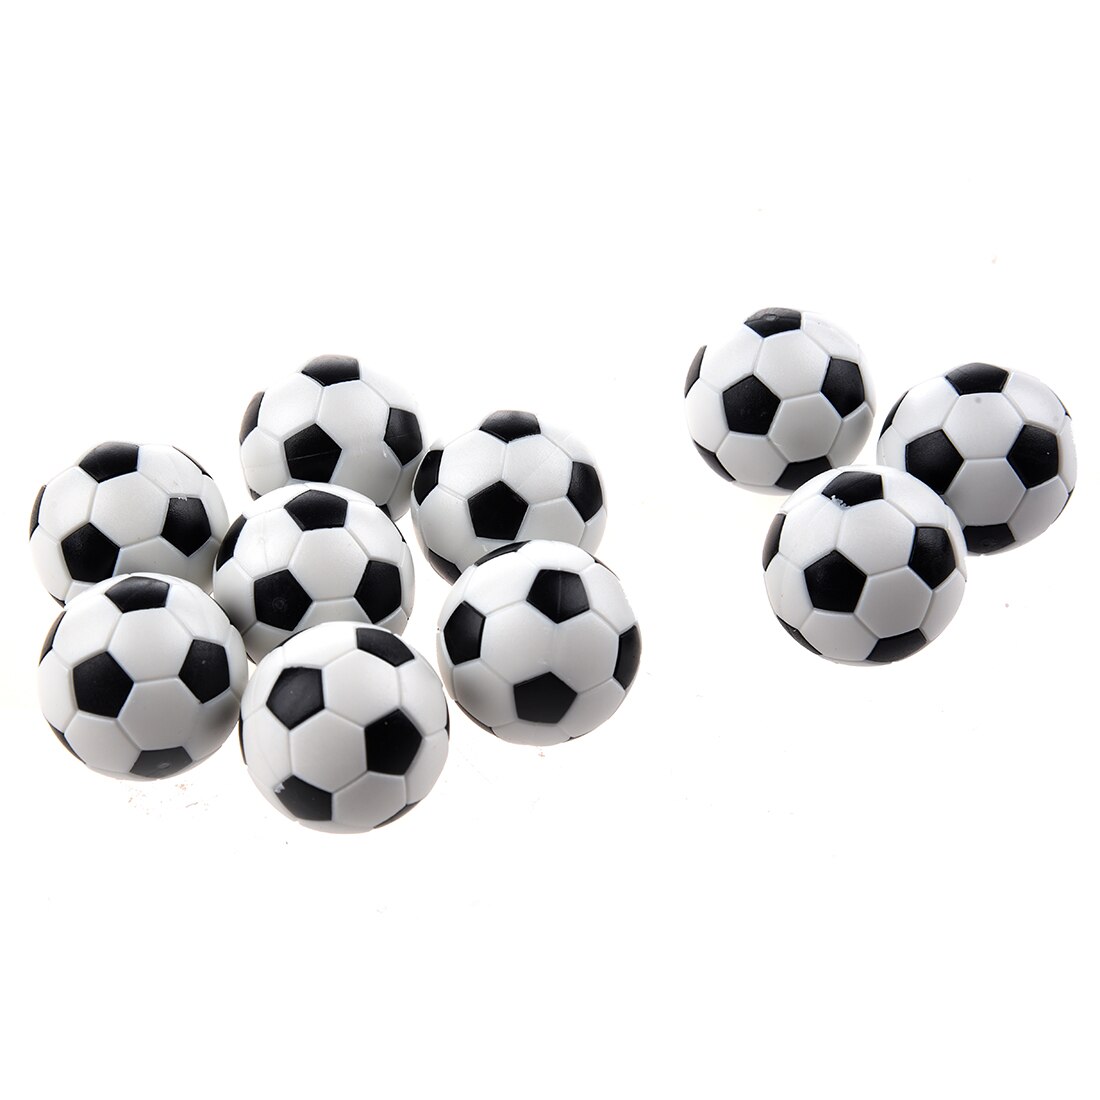 ELOS 20 pièces 32mm en plastique Table de Football baby-foot balle Football accessoires de jeu de Table durables